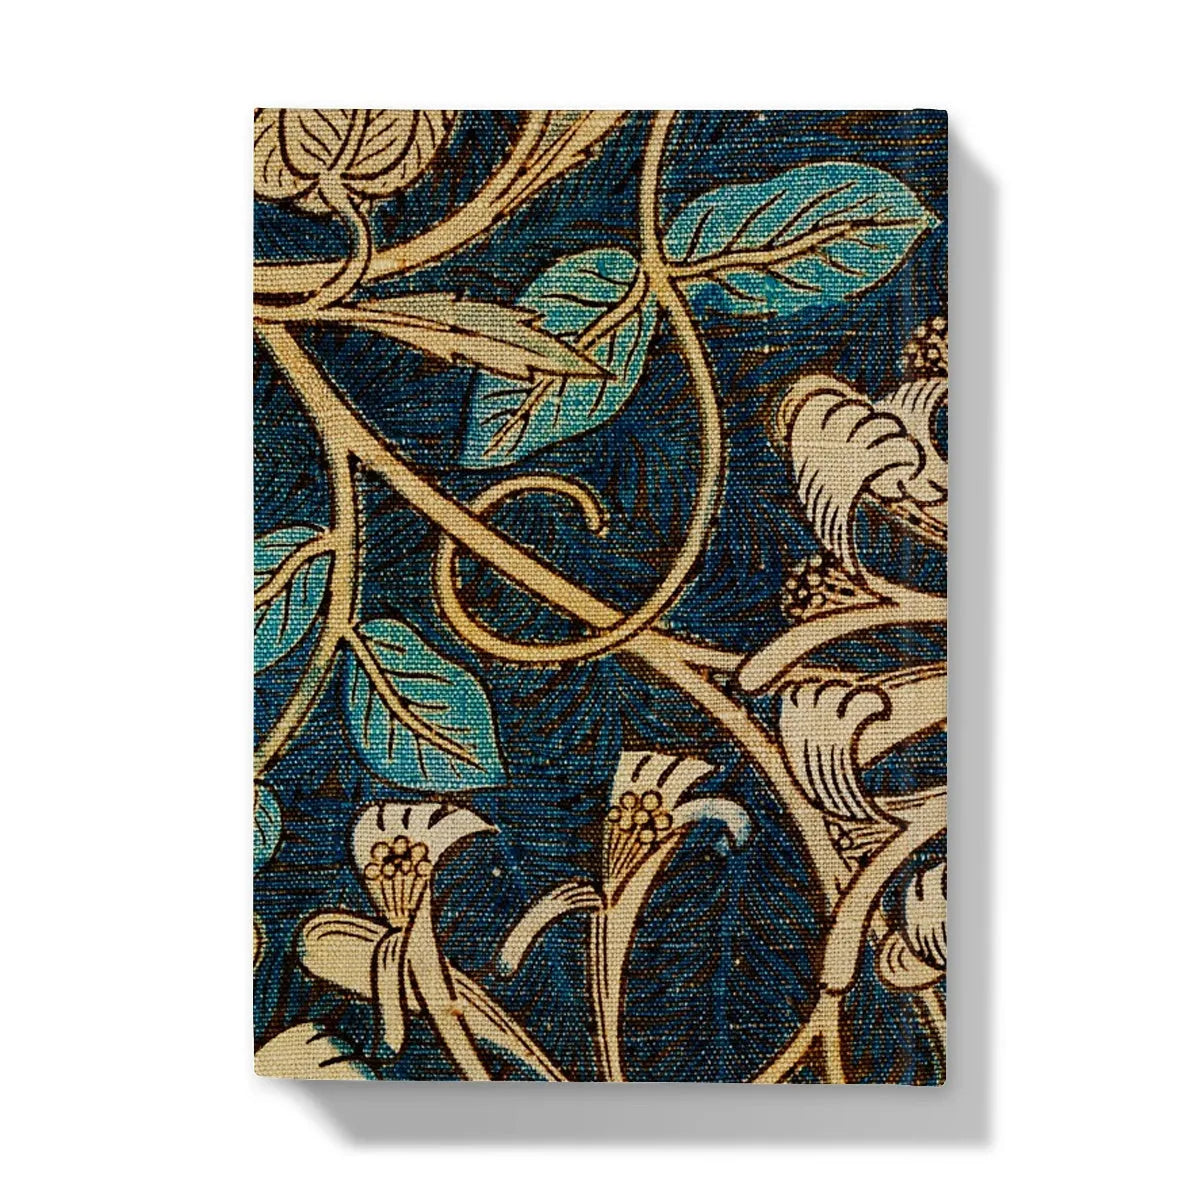 Honeysuckle 3 - William Morris Floral Aesthetic Journal - Notebooks & Notepads - Aesthetic Art